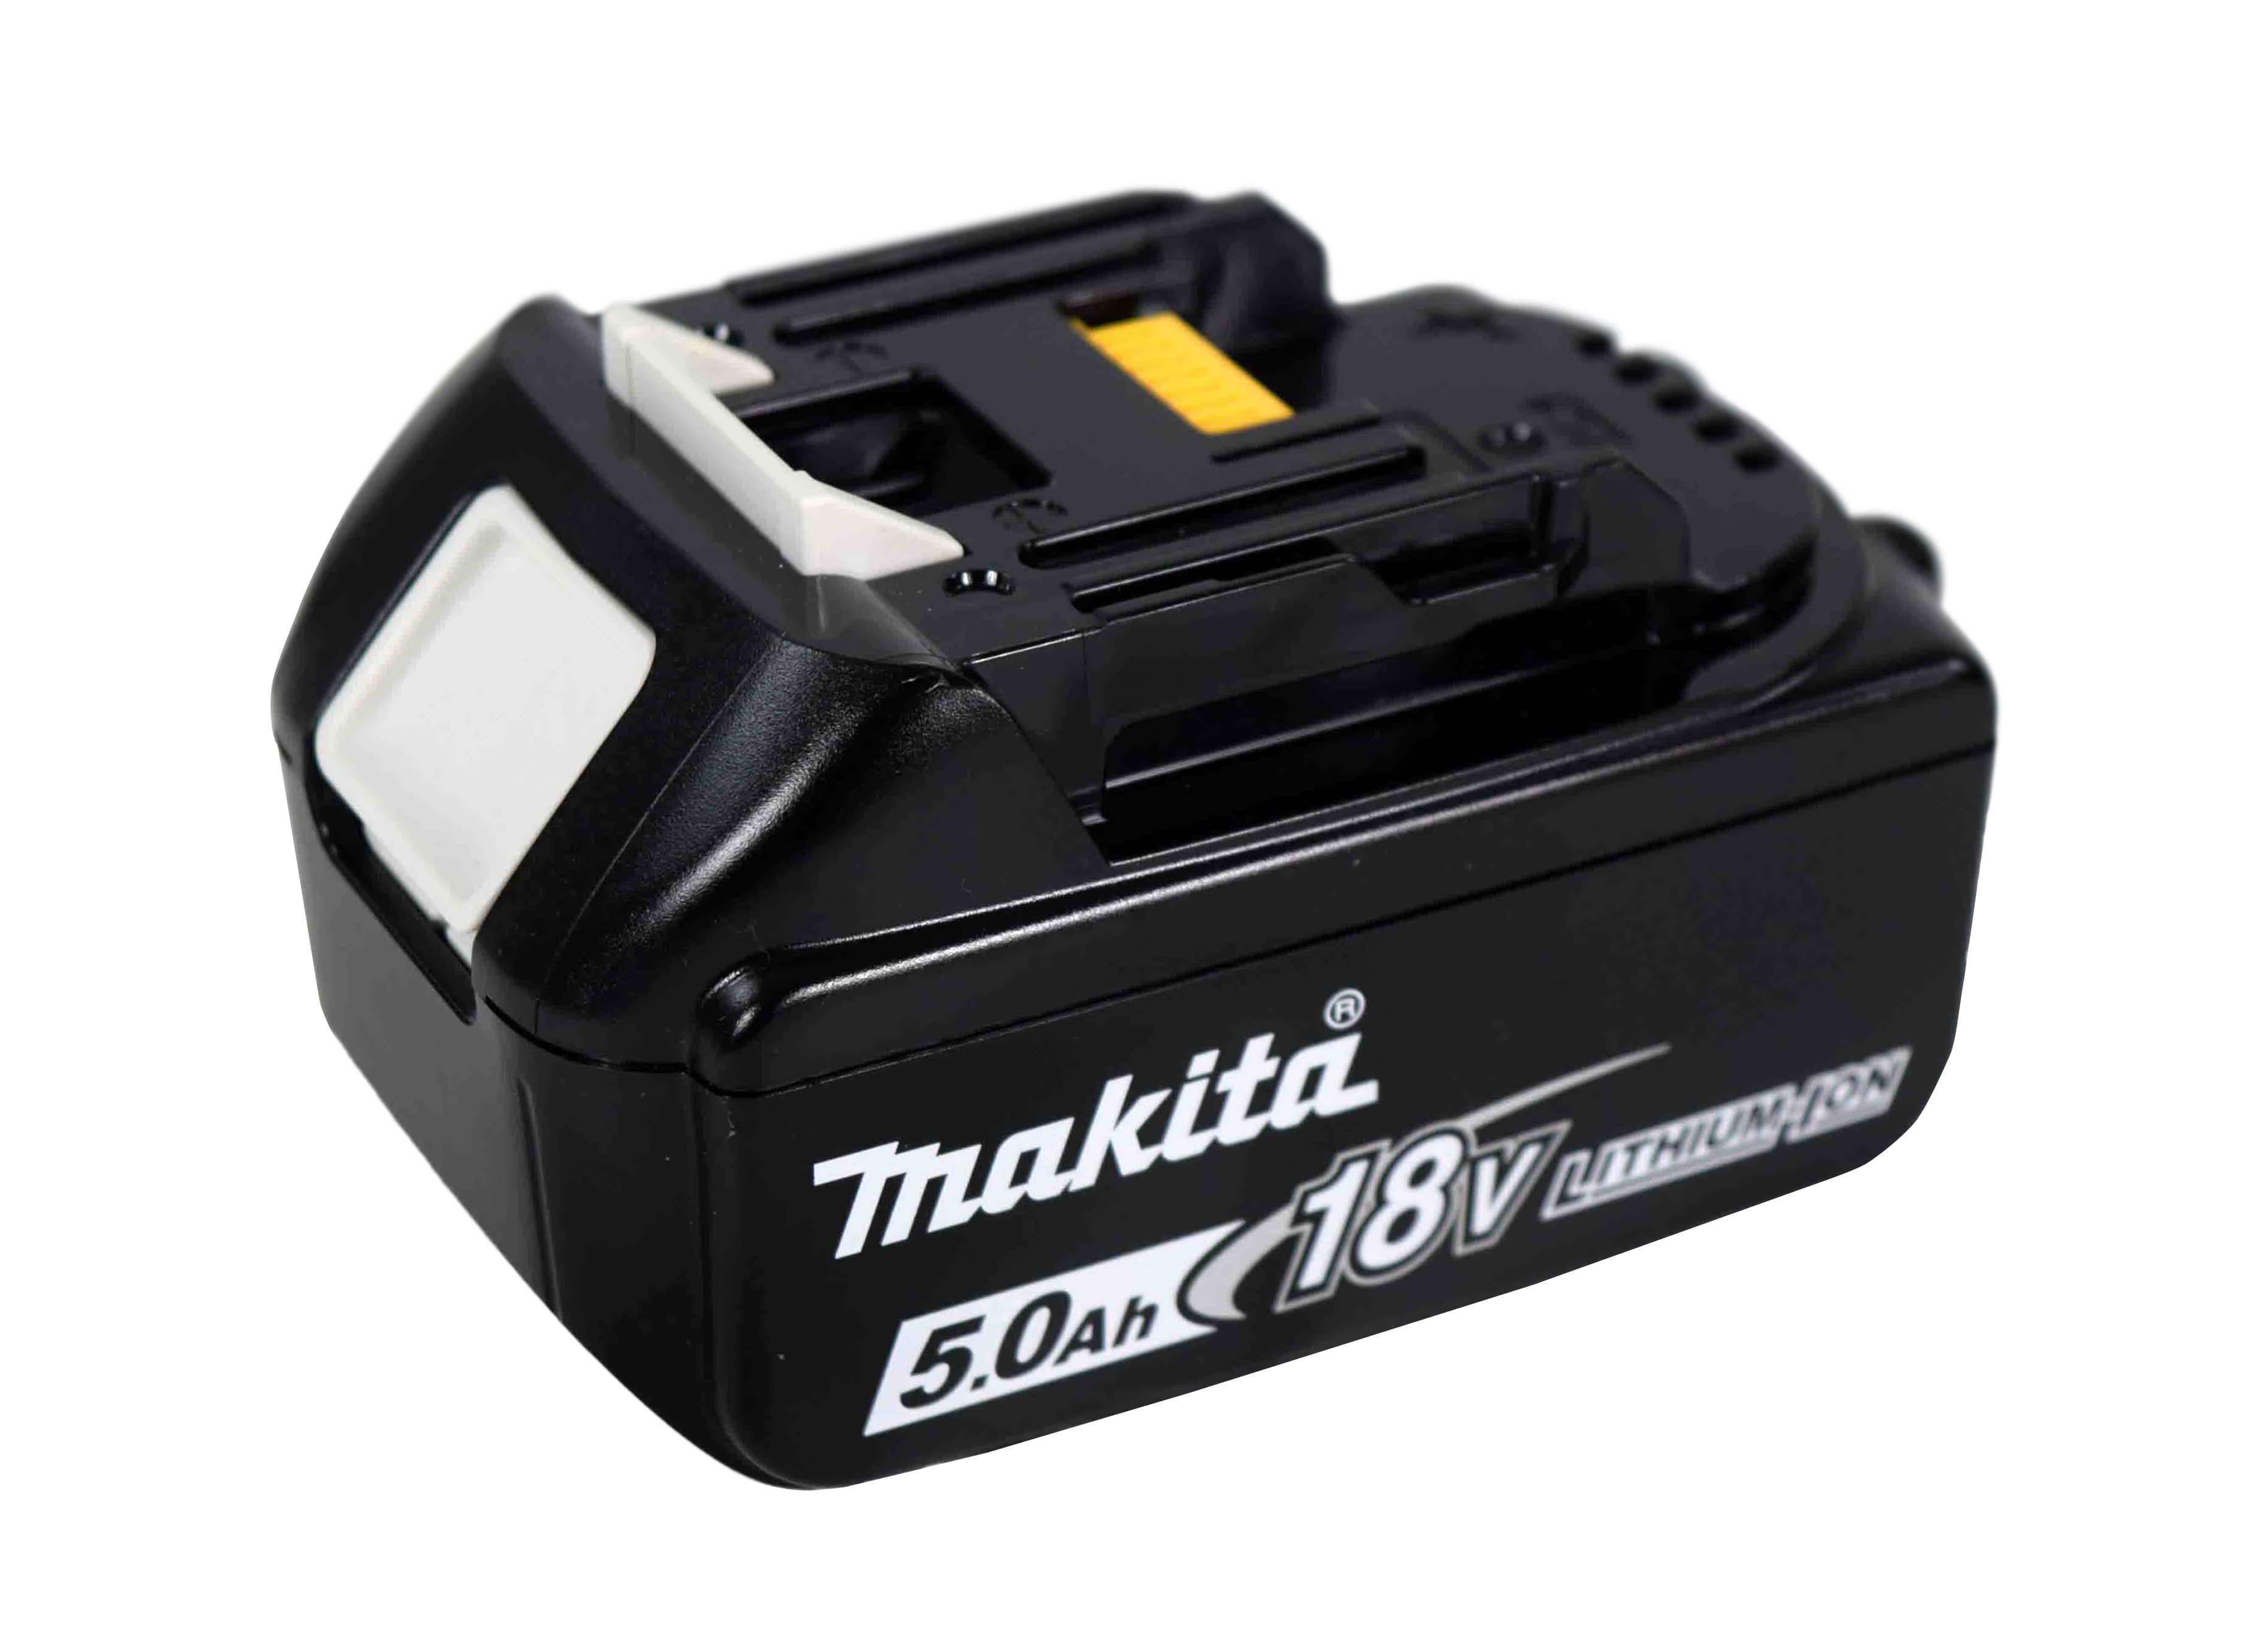 Lot de 10 Batterie Makita Capuchon de Protection, Batterie Makita de  poussièr, pour Batterie Makita Type BL1830, BL1840, BL1850, BL1860,  14.4v-18v